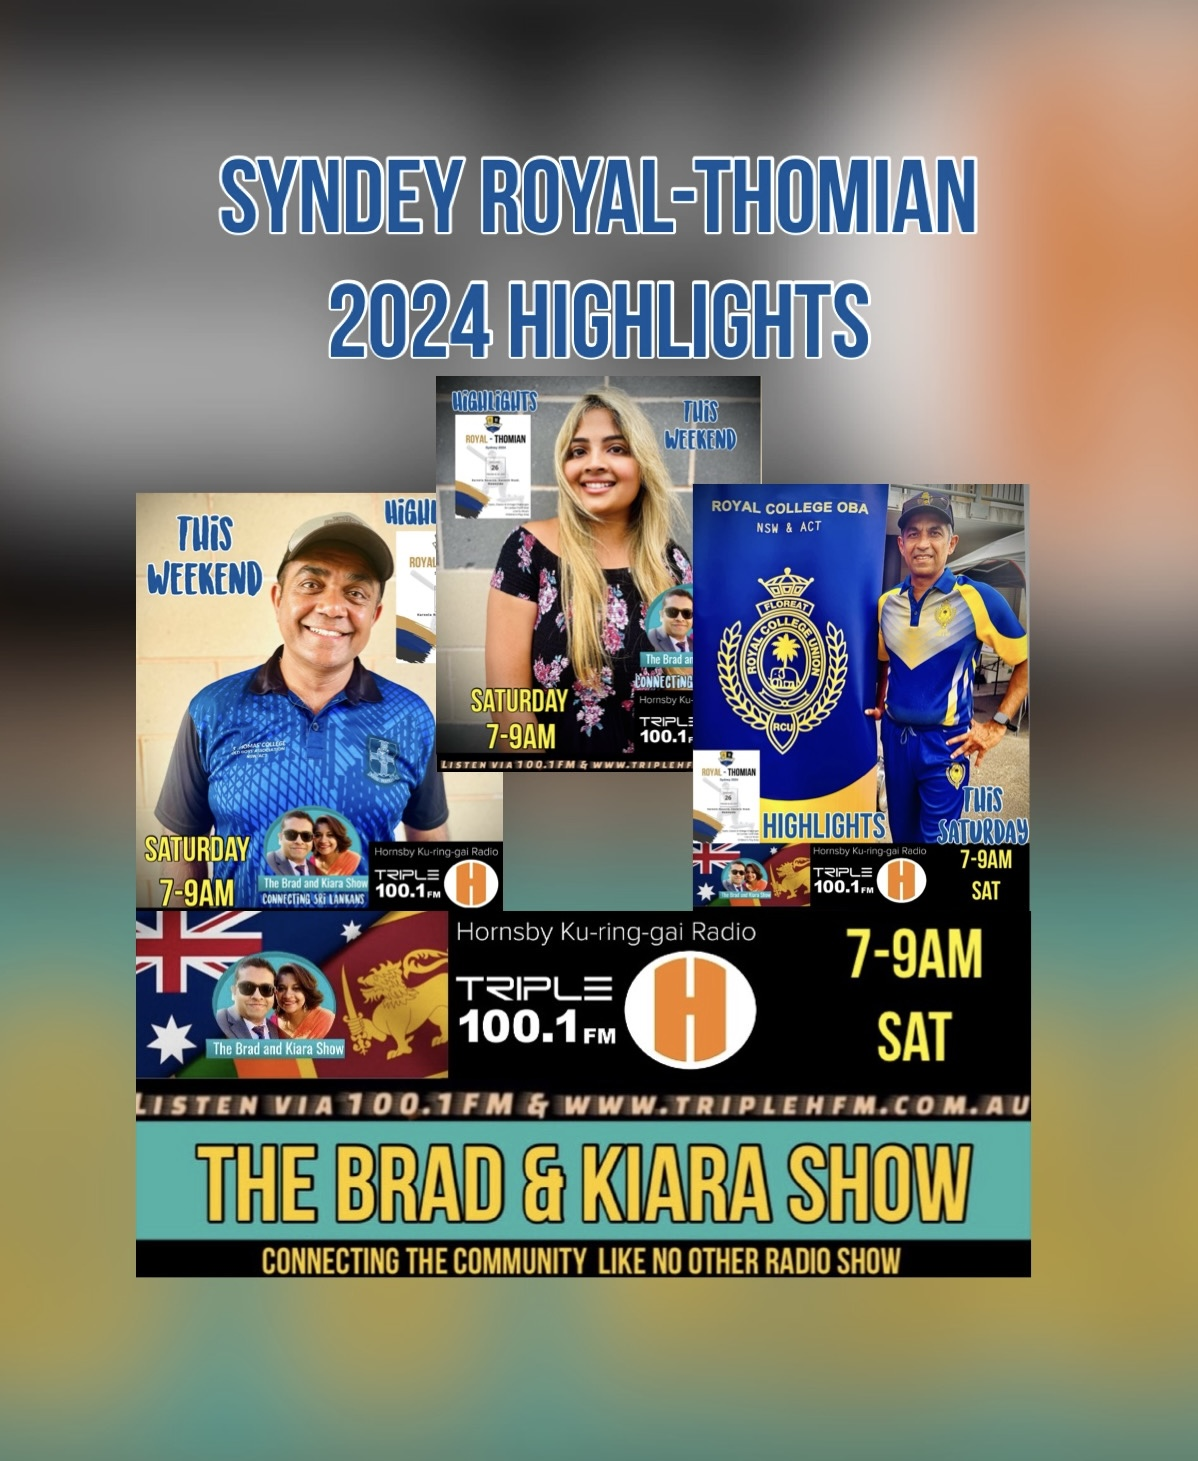 The Brad & Kiara Show SAT 7AM Promoting Sri Lankan Events Royal Thomians Sydney 2024 at Kareela Reserve on 26 JAN Highlights PODCAST 3